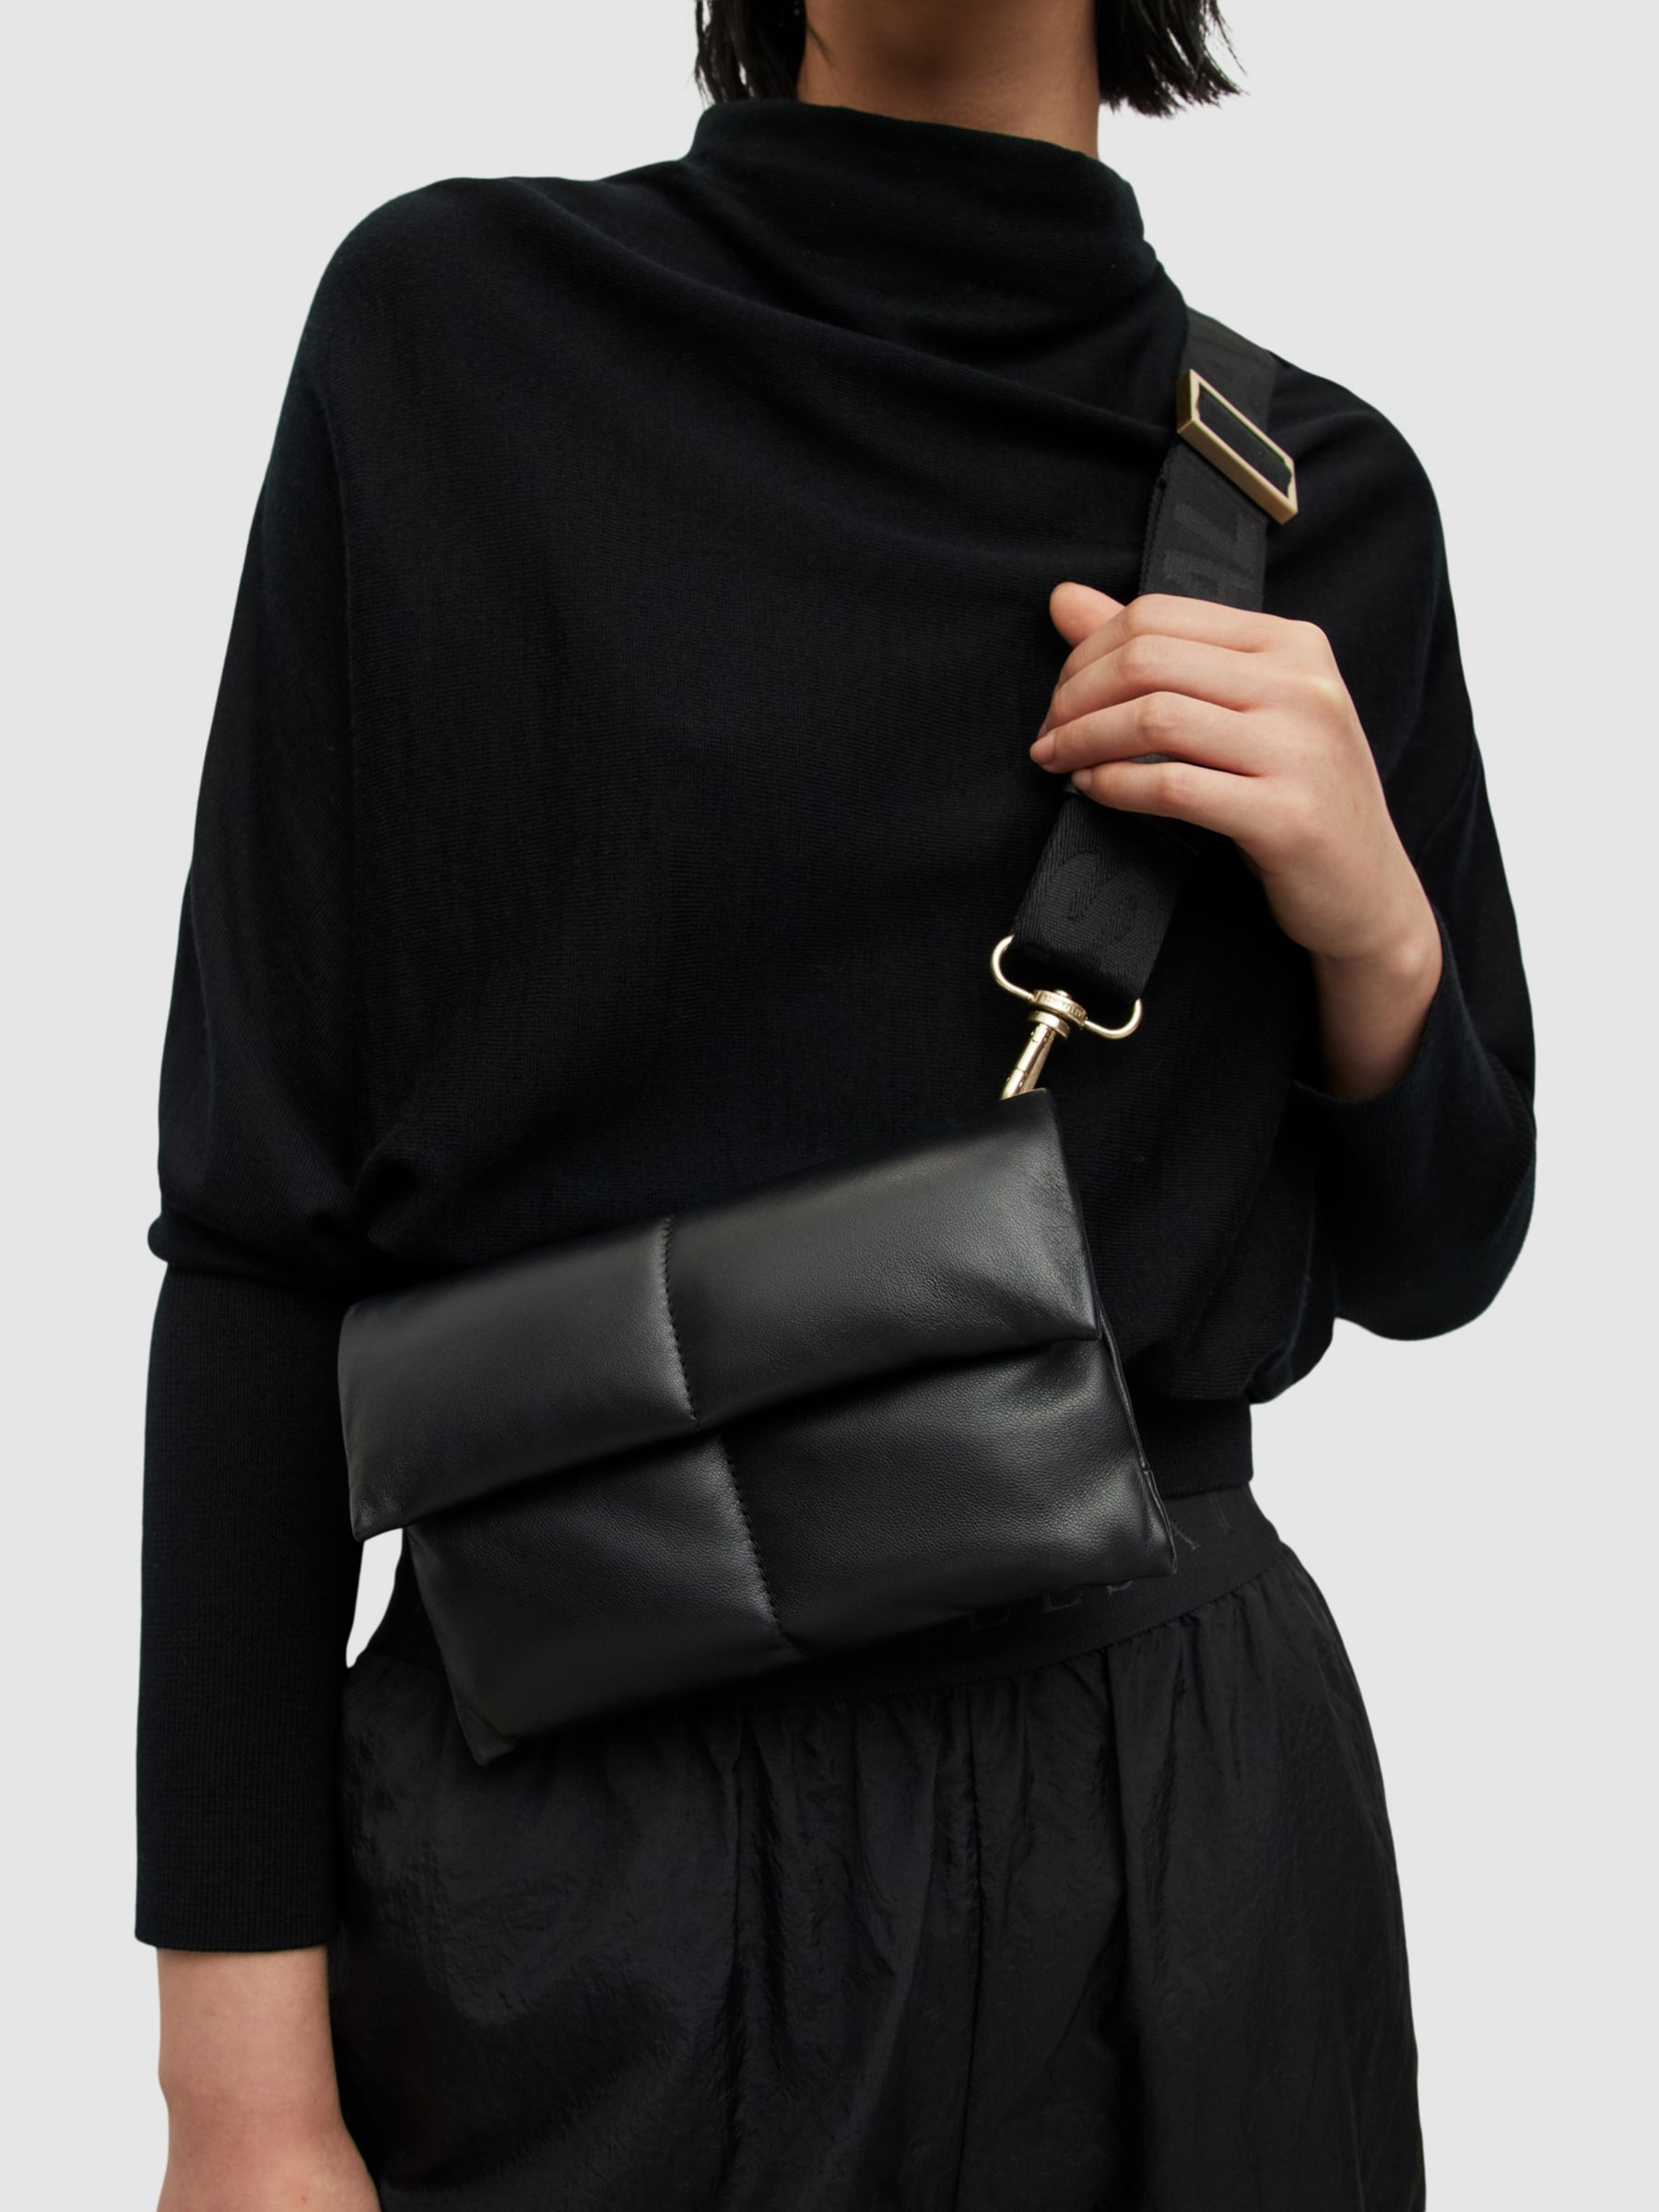 AllSaints Ezra Quilt Crossbody Handbag, Black at John Lewis & Partners